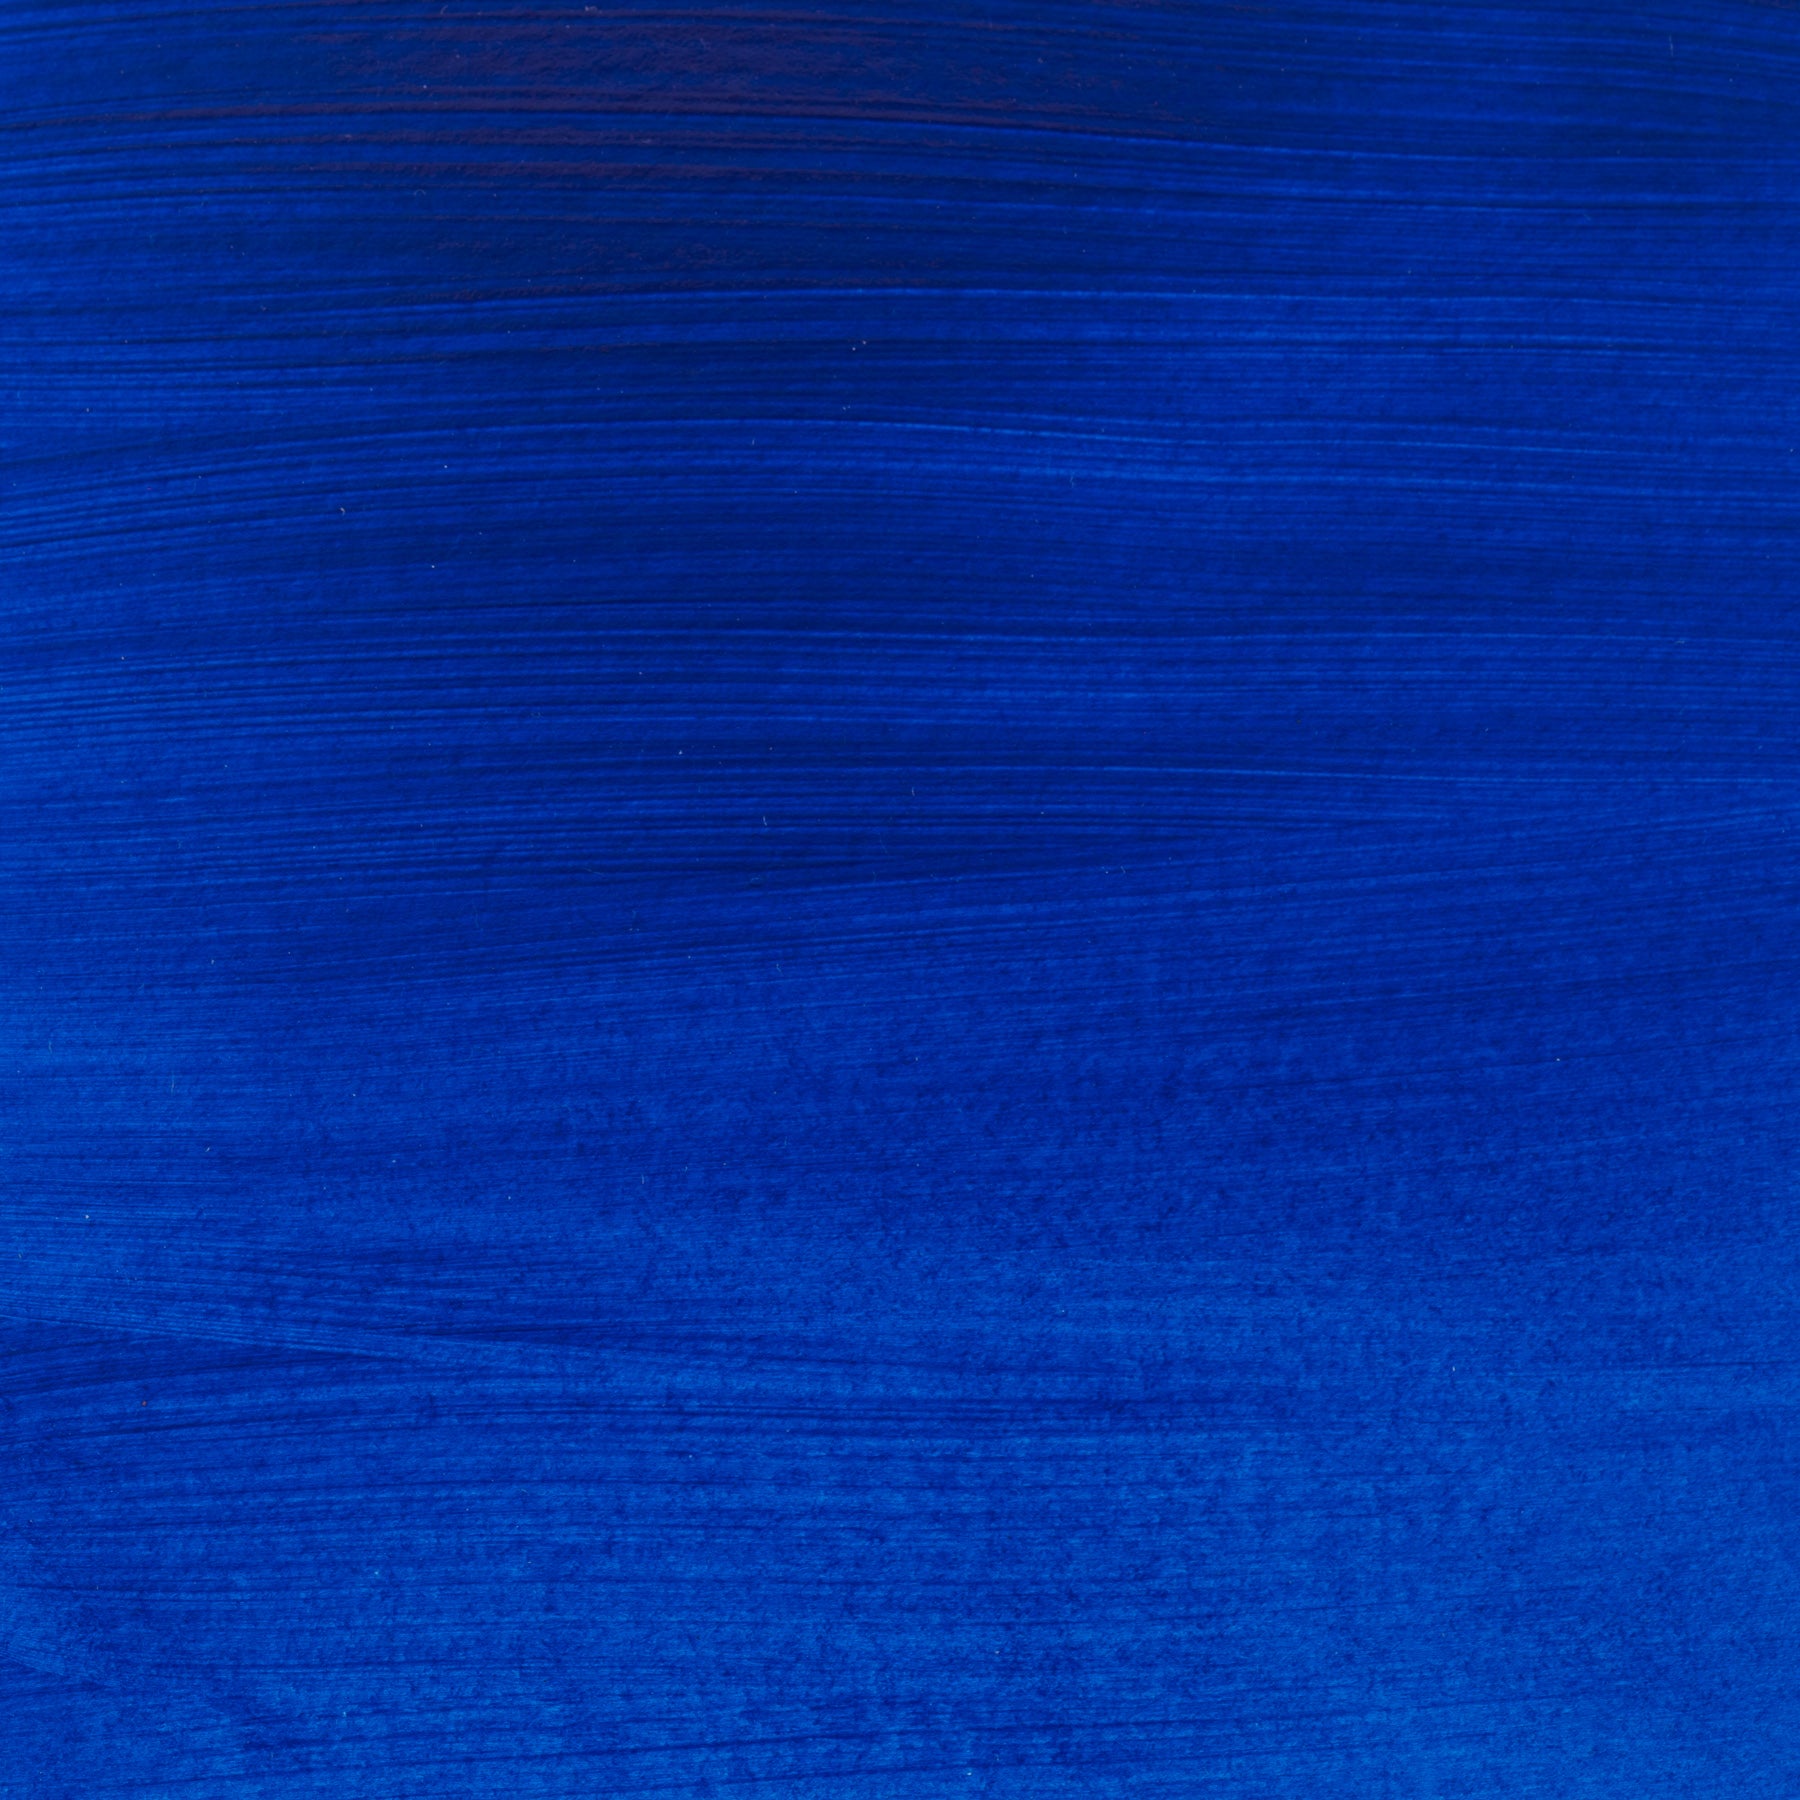 Amsterdam Acrylic paint 120 ml 570 Phtalo blue